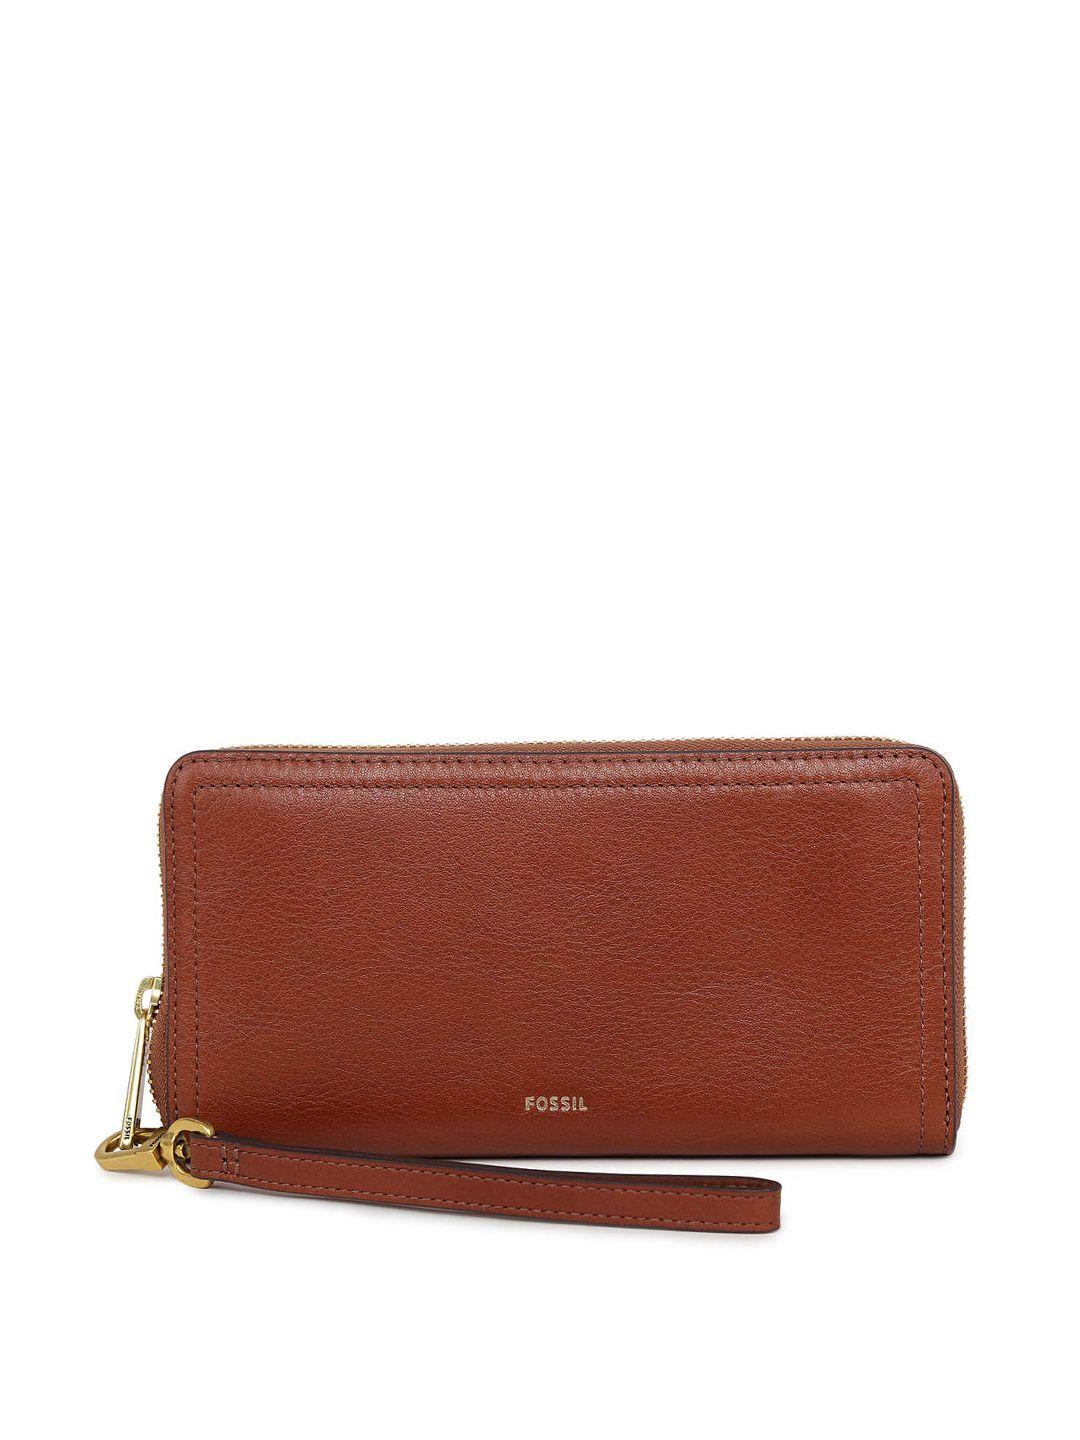 fossil women brown solid leather zip around wallet